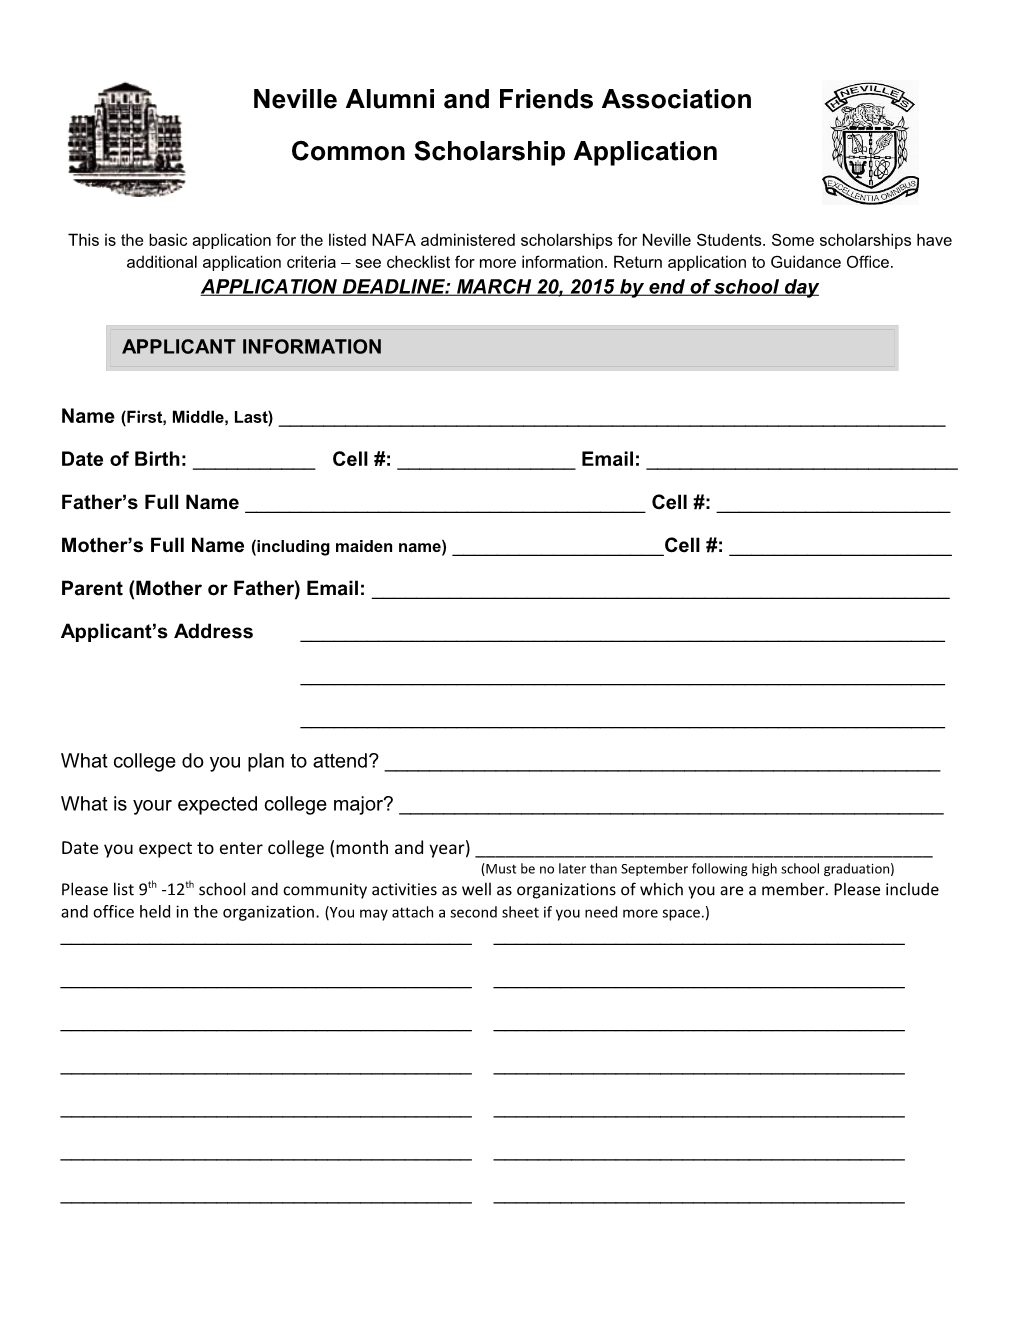 Common Scholarship Application